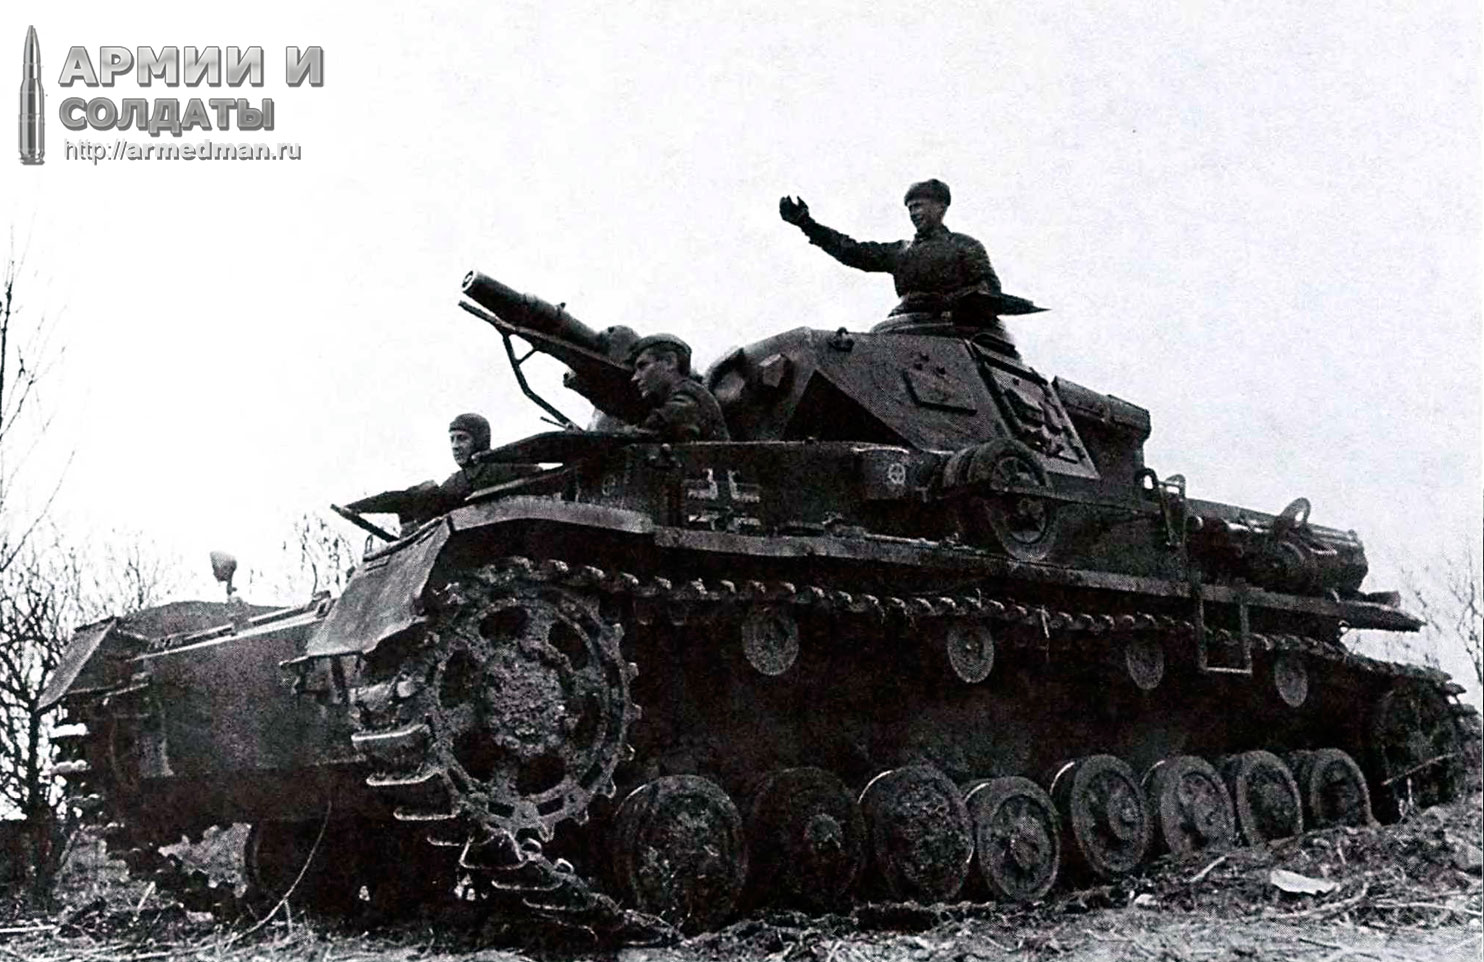 Pz-IV-Aust-F1-на-службе-в-Красной-Армии,-1943